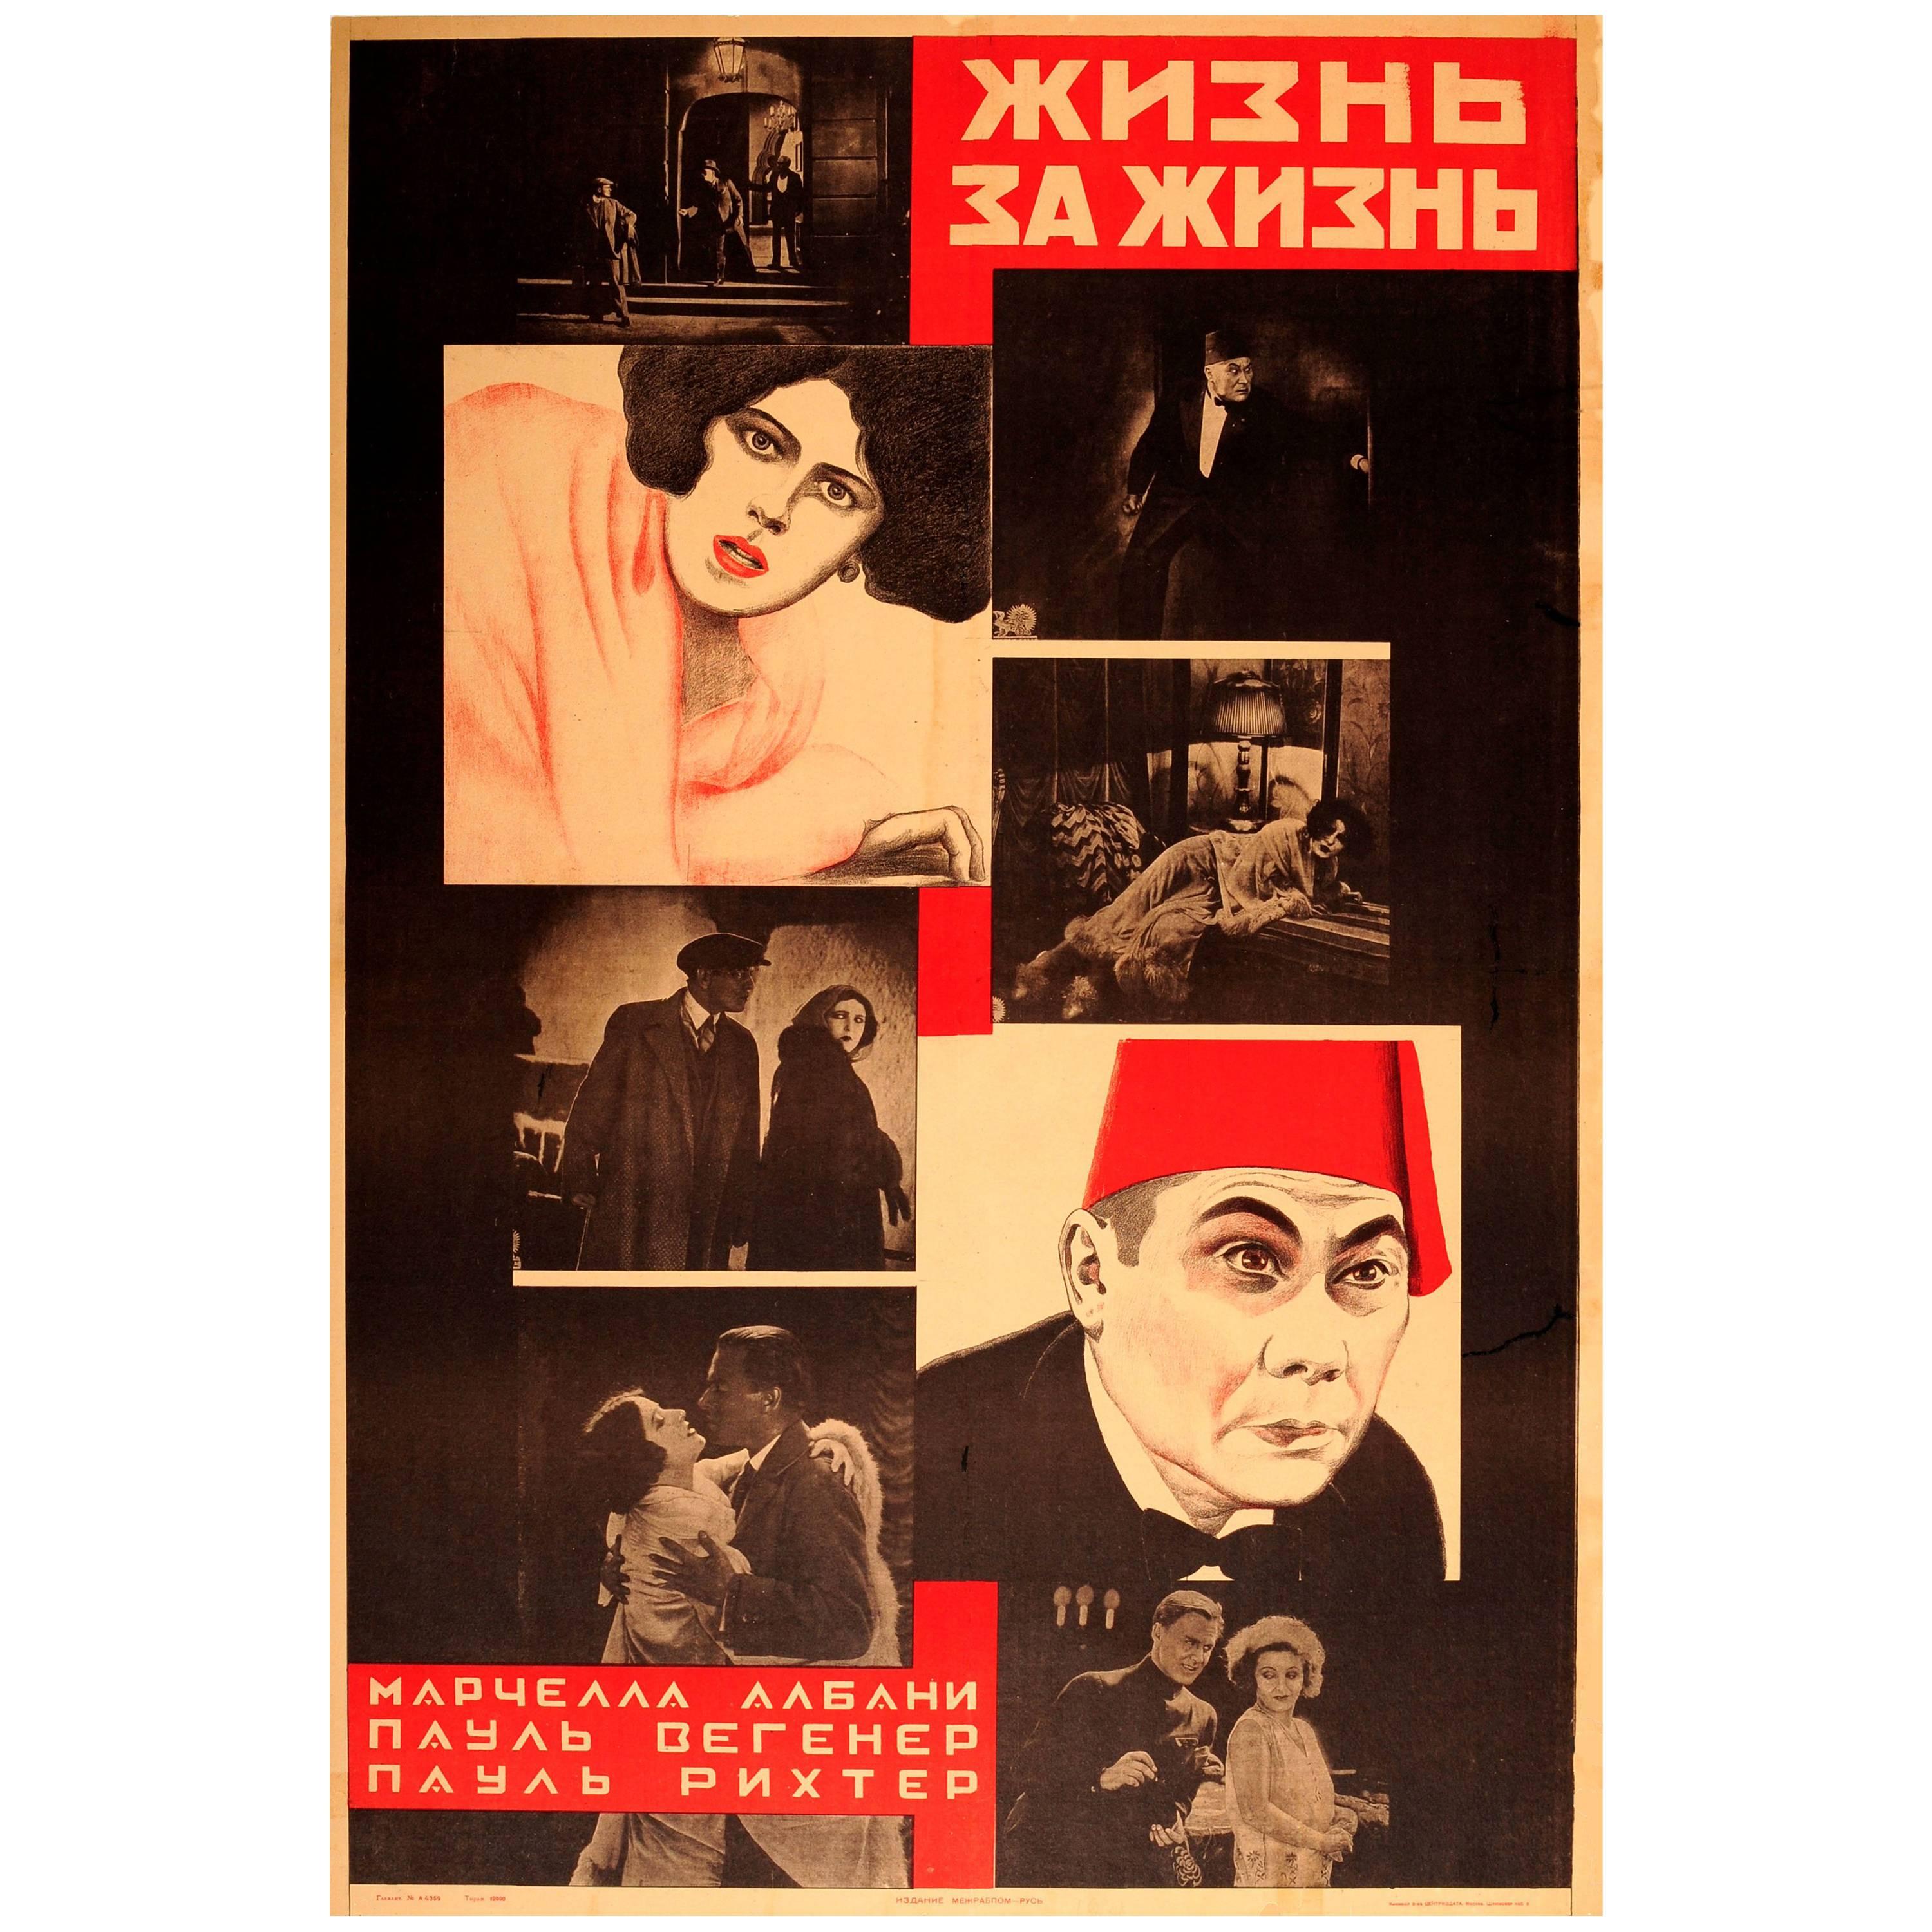 Original Soviet Constructivist Design Movie Poster for a Silent Film - Dagfin For Sale